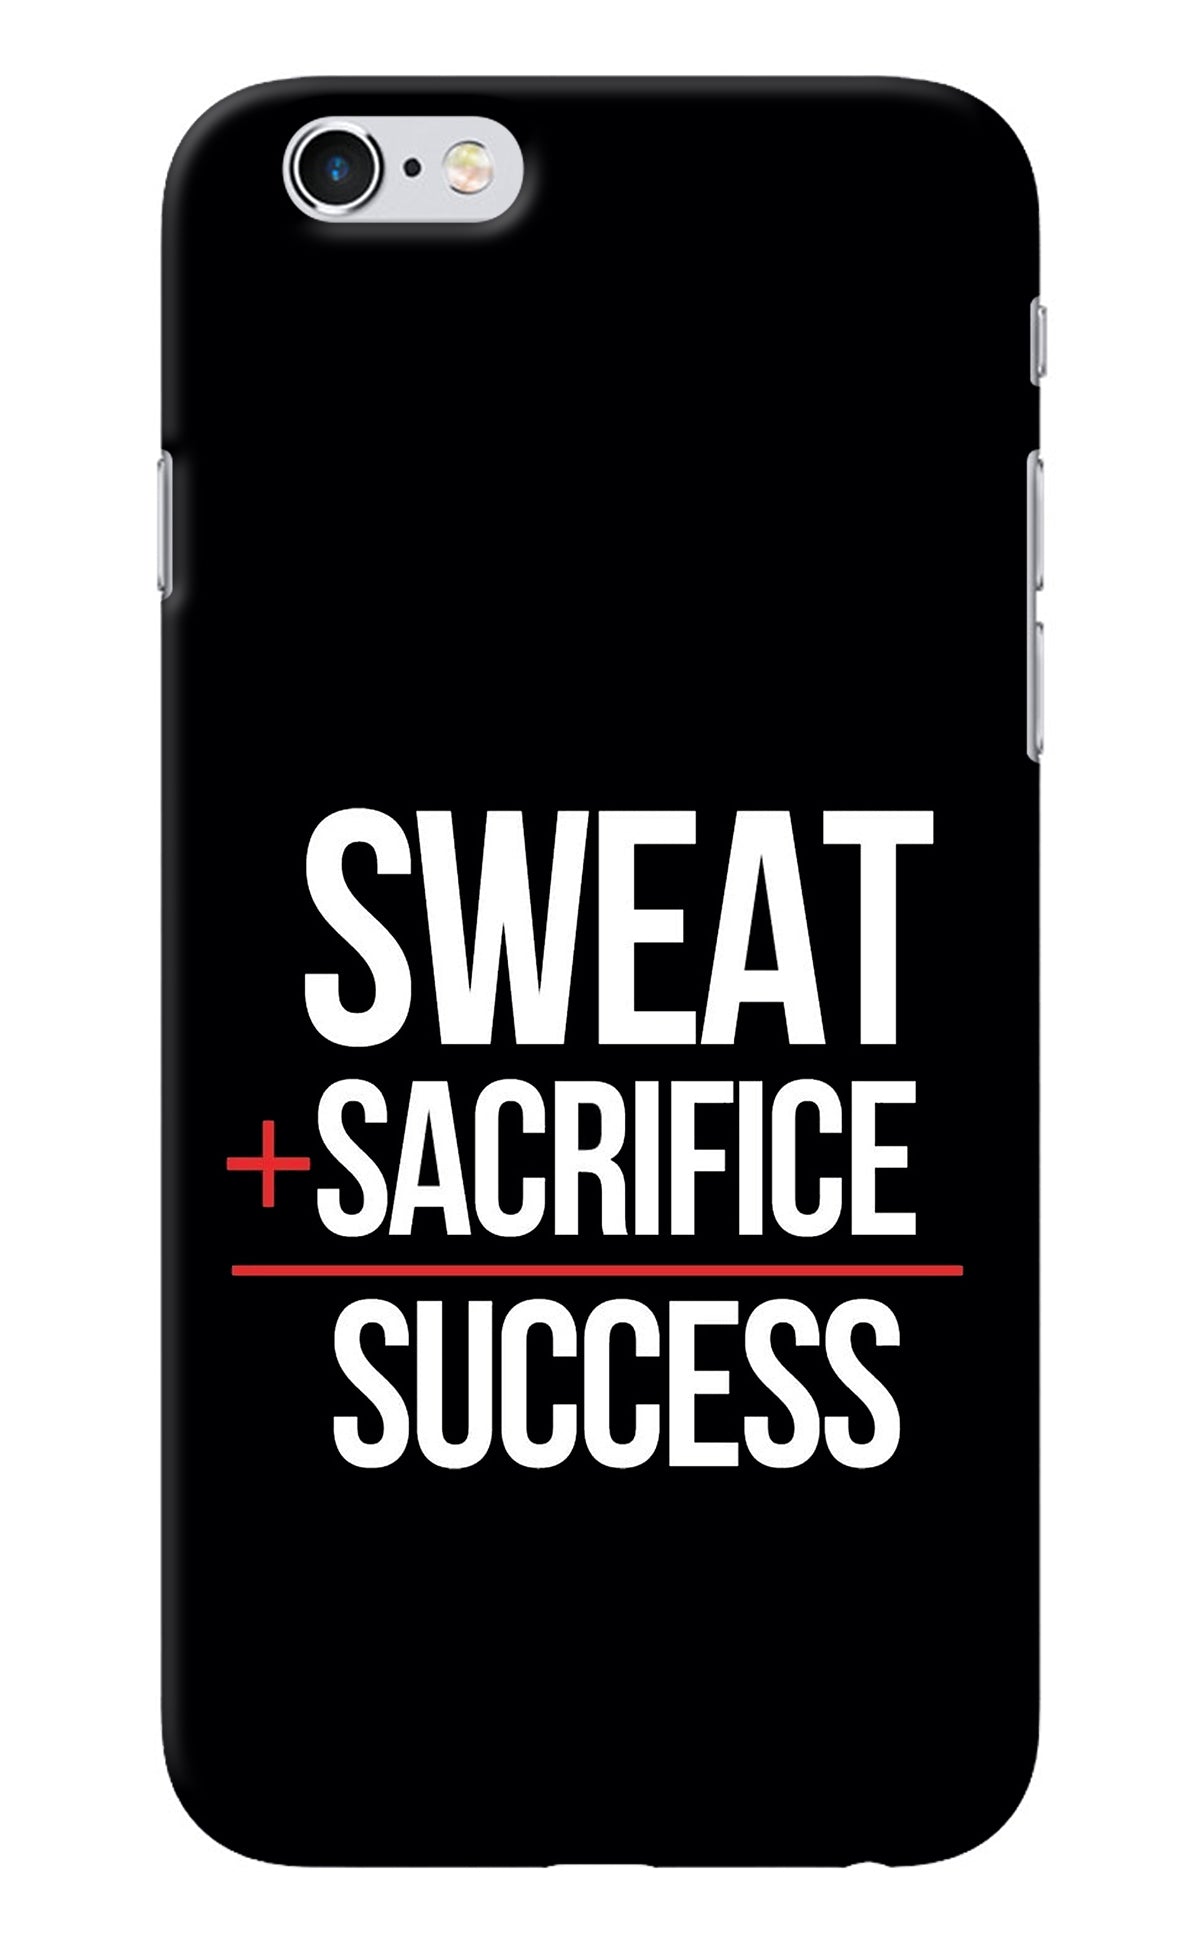 Sweat Sacrifice Success iPhone 6/6s Back Cover